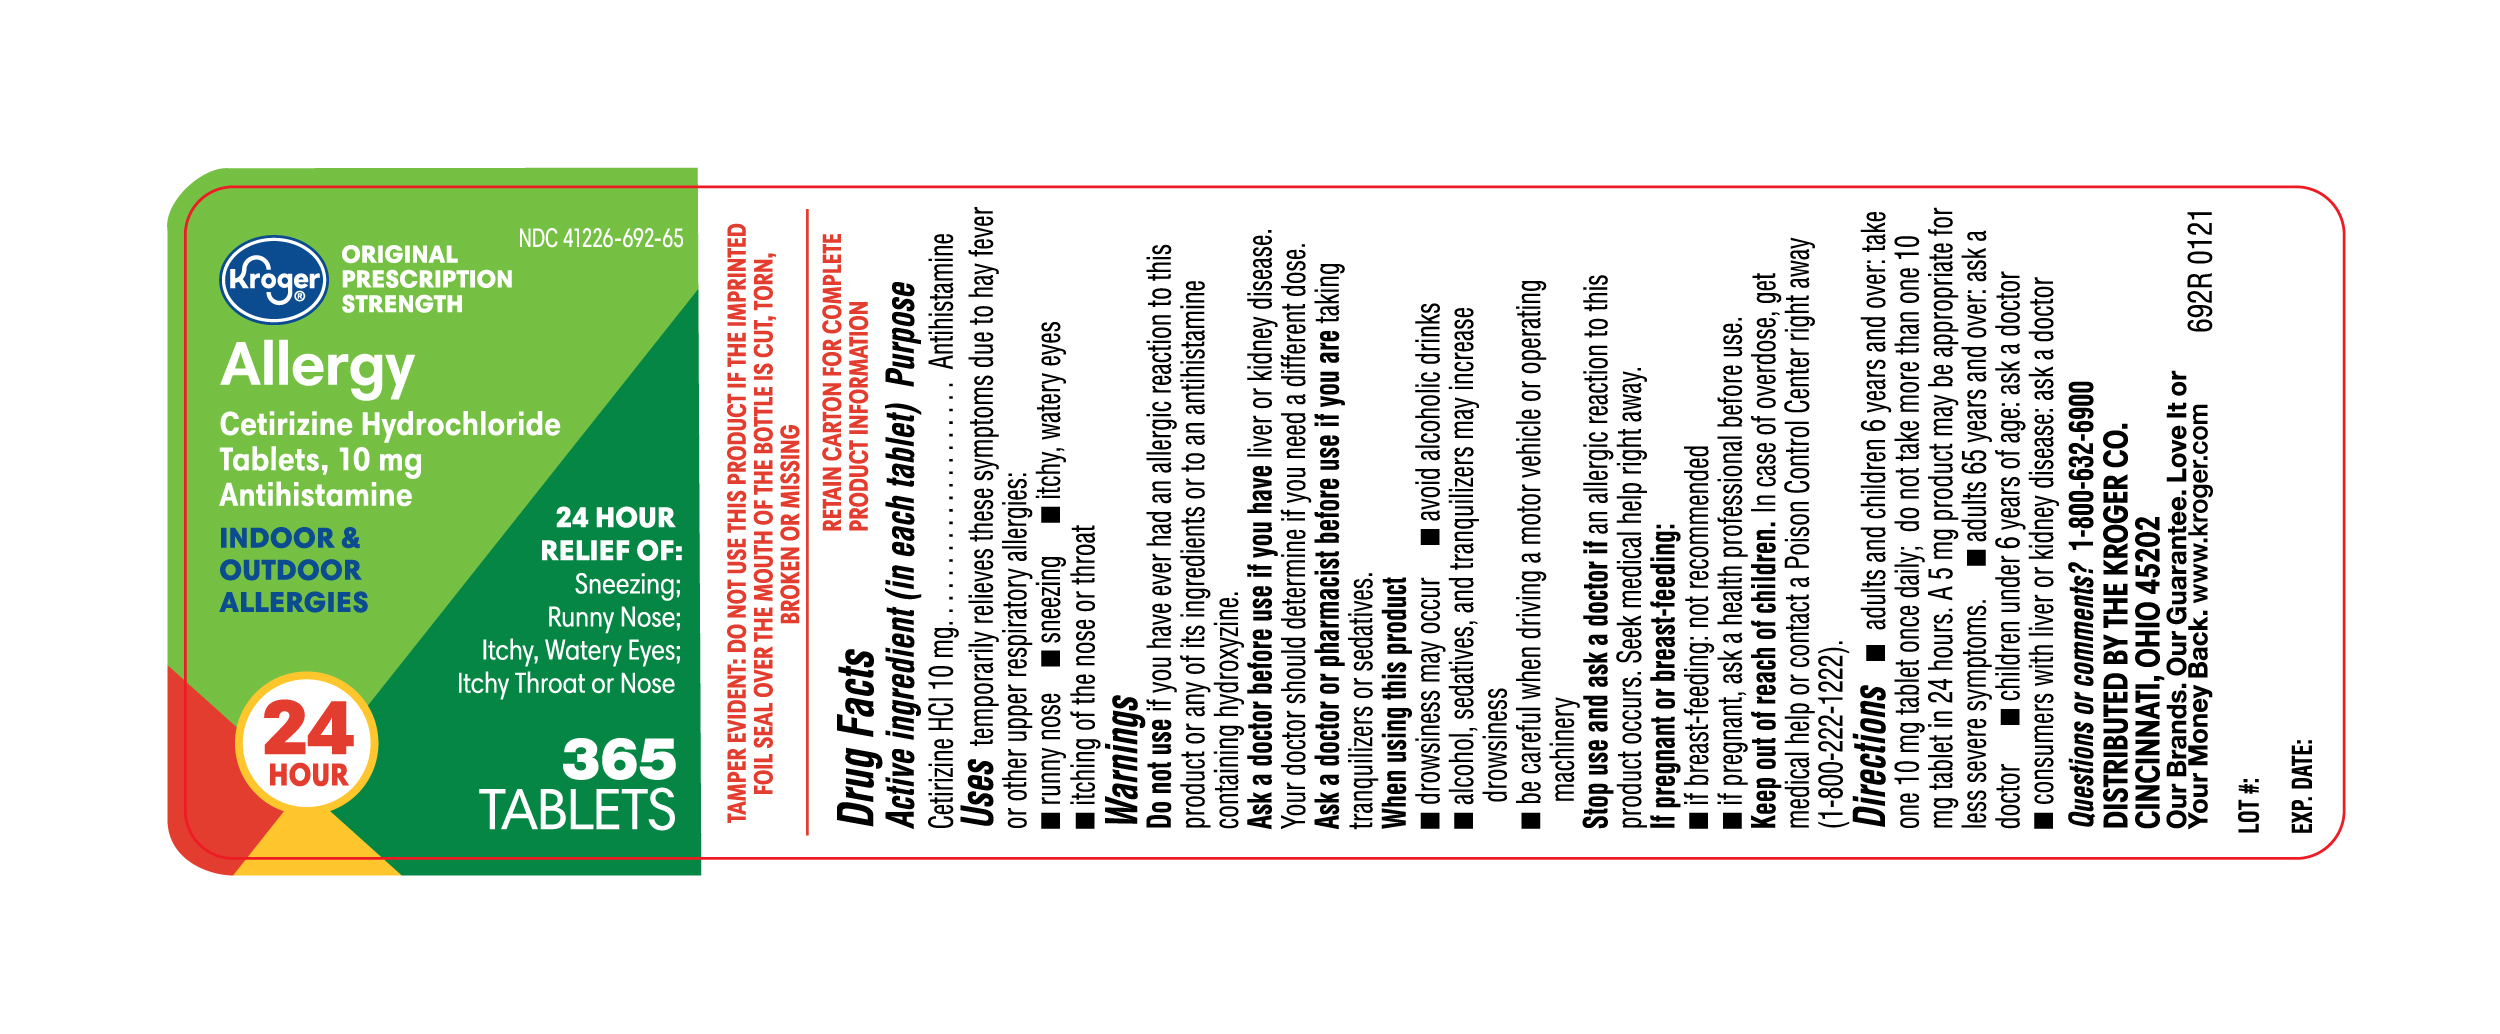 Cetirizine Hydrochloride Tablets 10mg-365ct-Bottle label